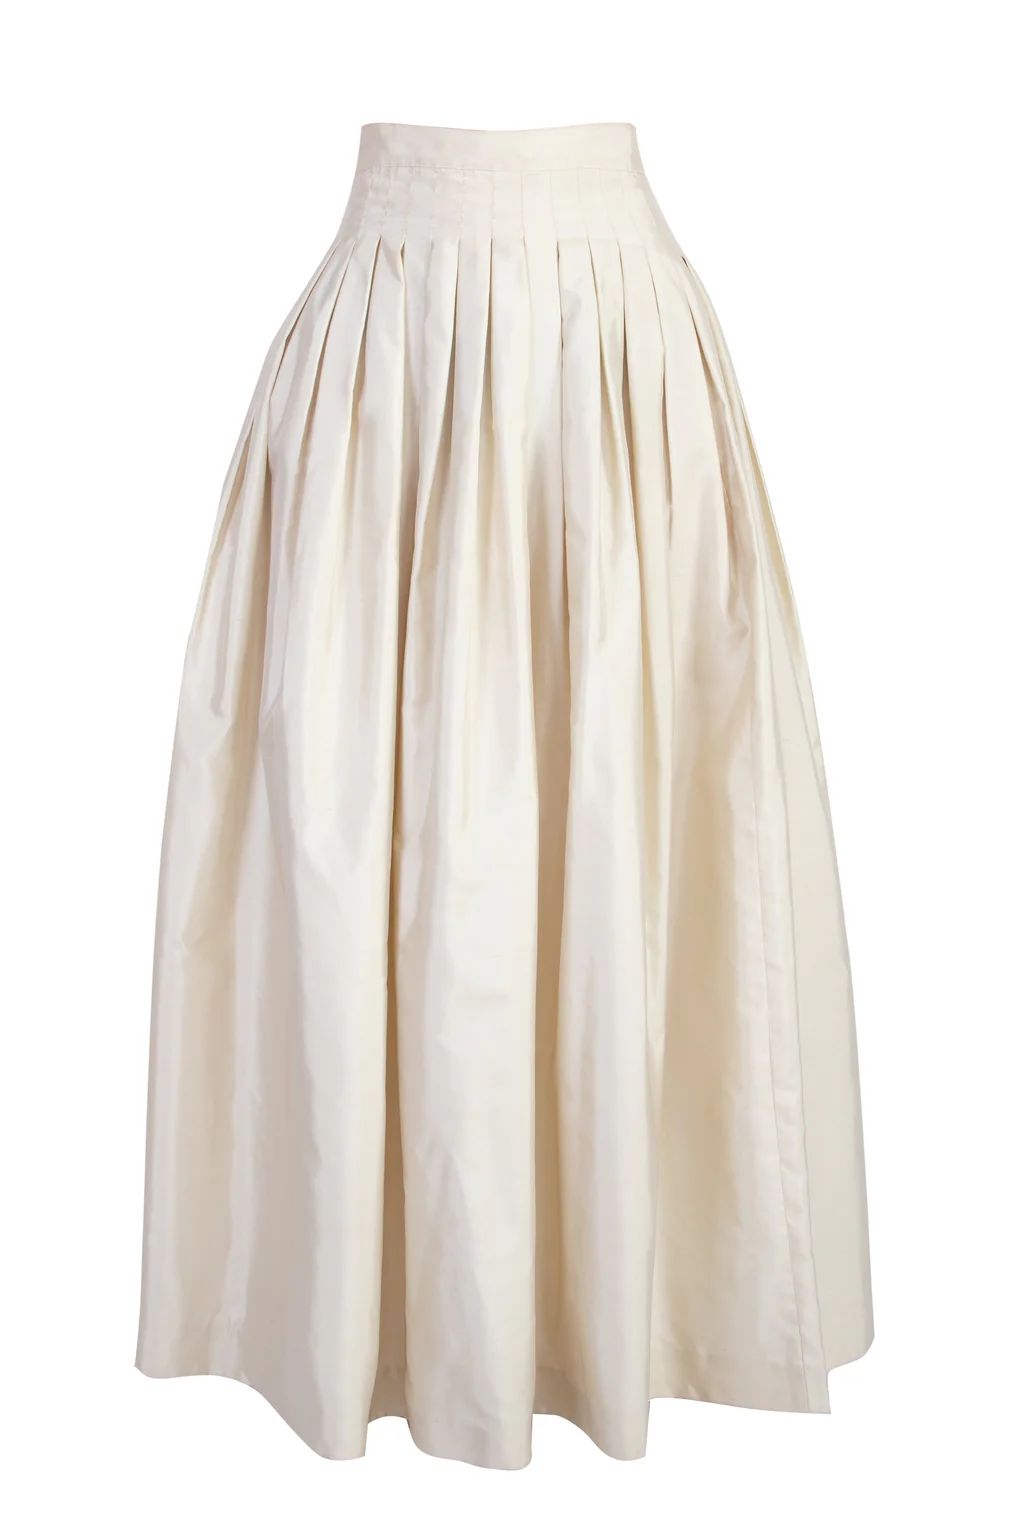 Yass Taffeta Ball Skirt - Ivory | Rosewater Collective